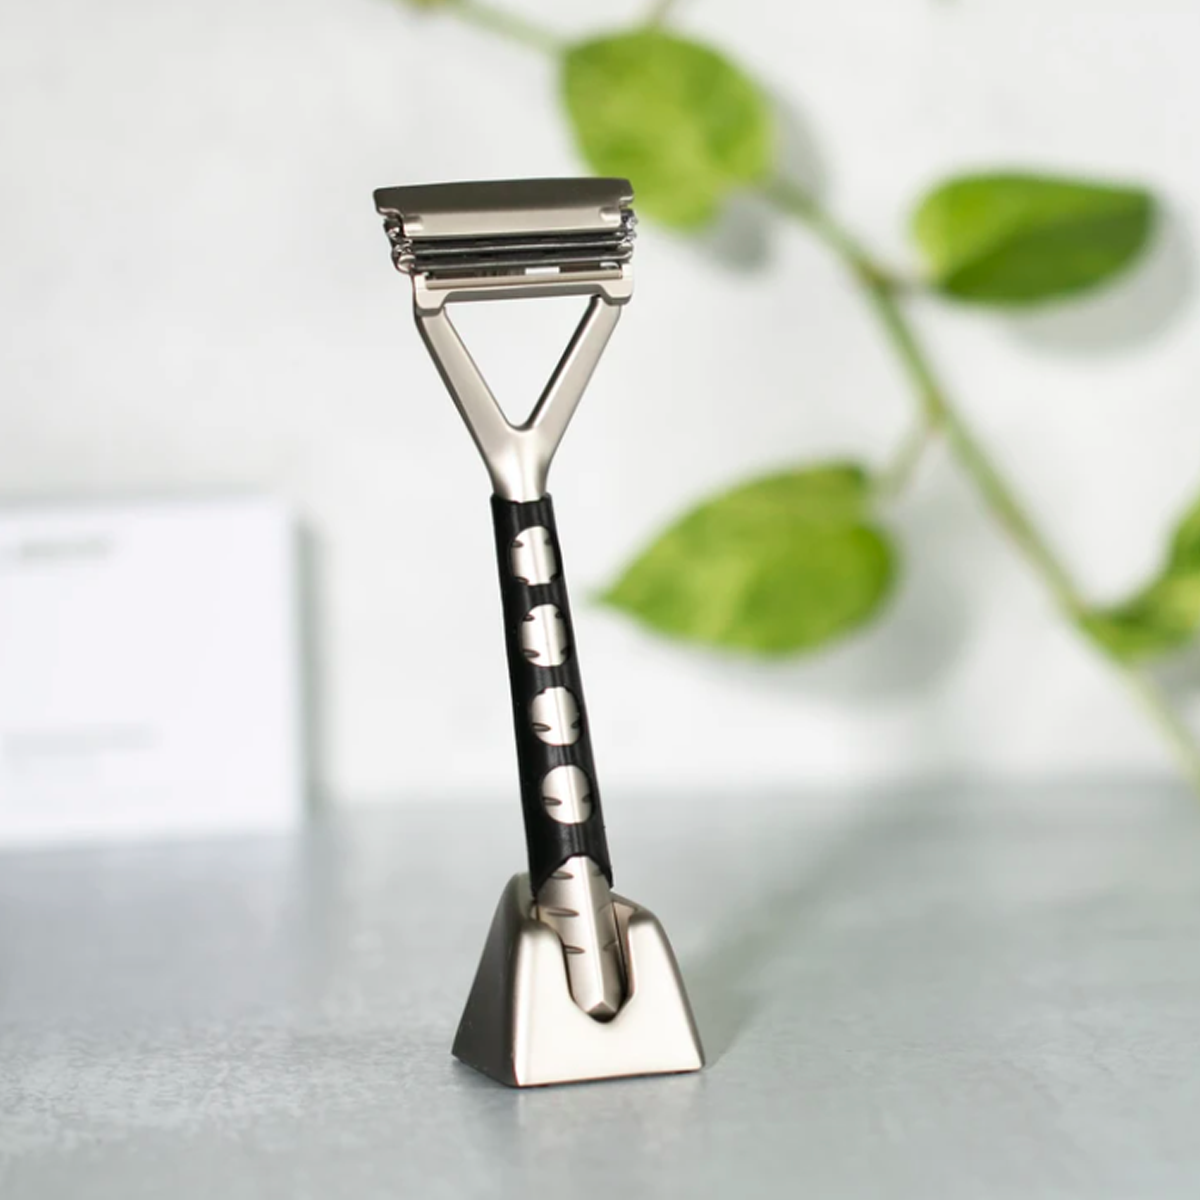 Black custom molded silicone grip sleeve on a silver leaf razor. The razor is sitting upright in a silver leaf stand.